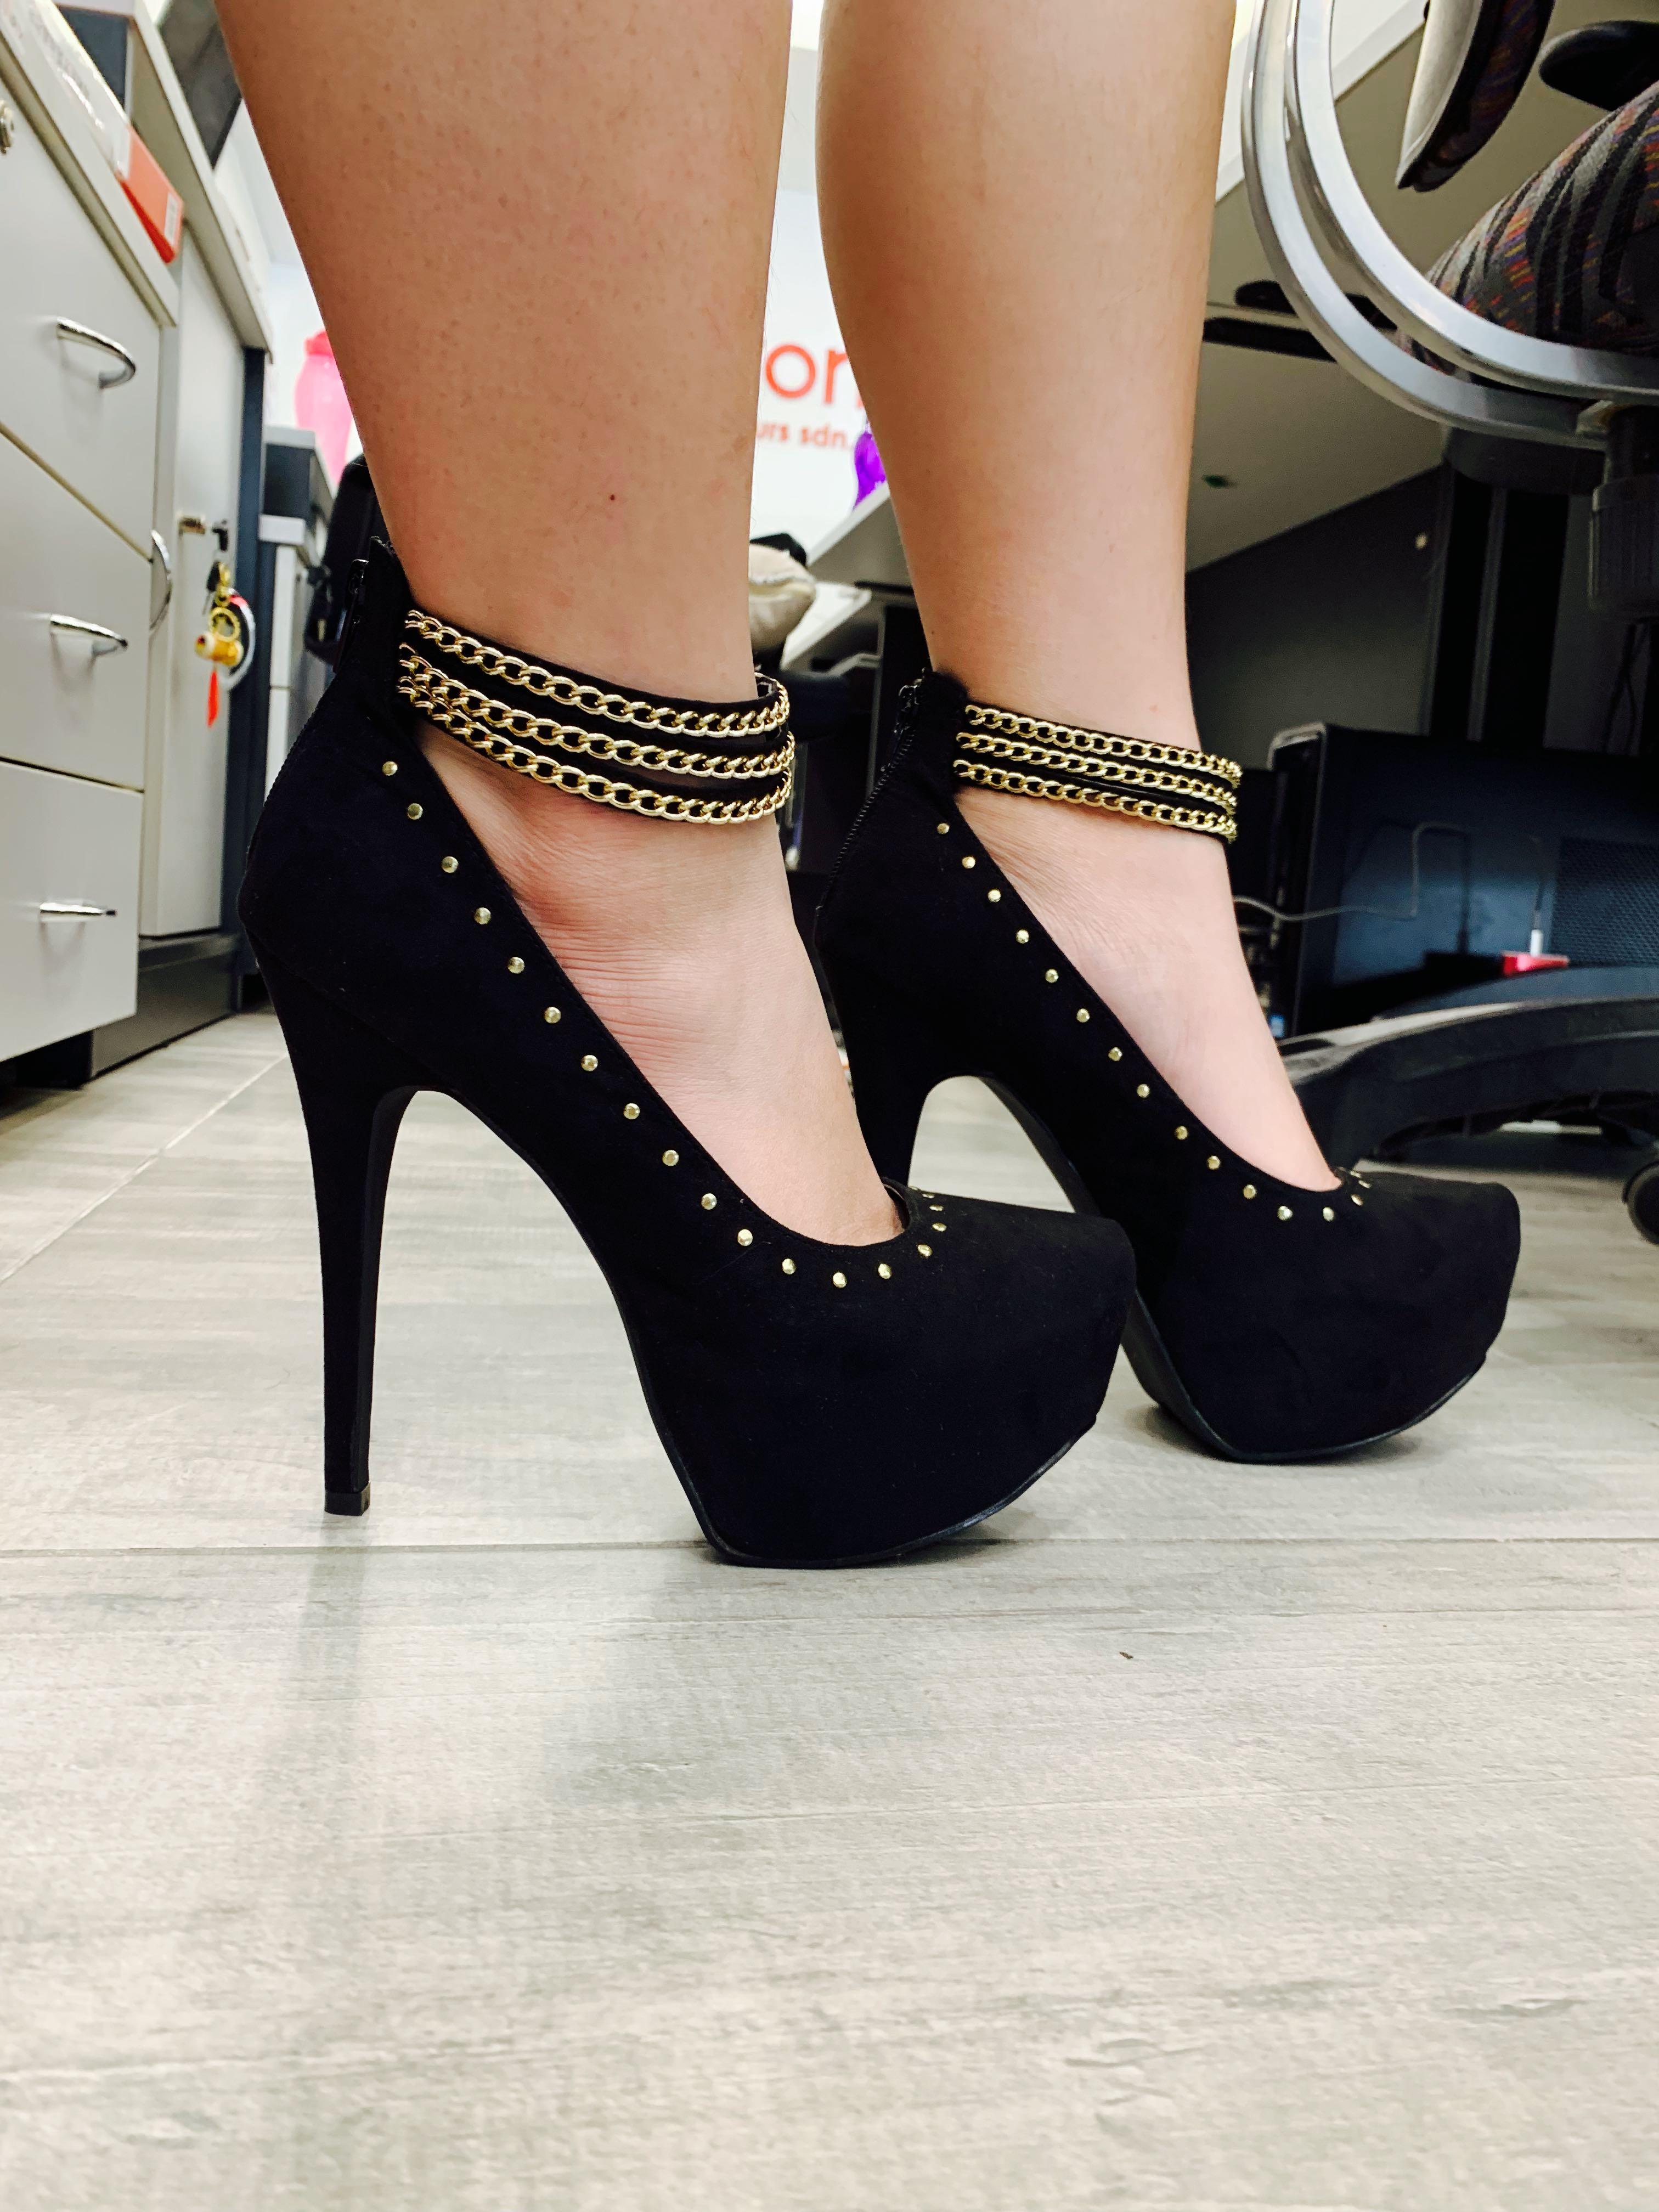 high heels in black color